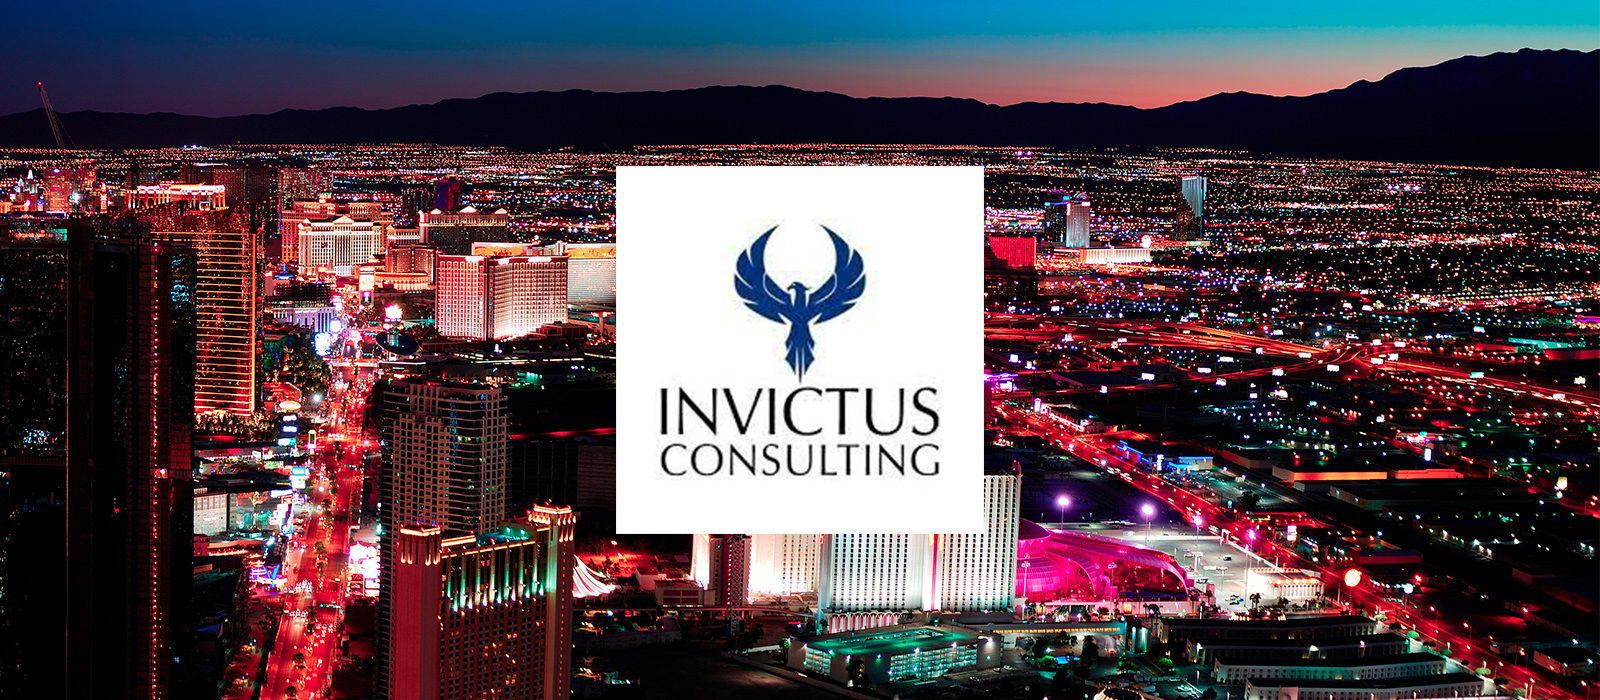 invictus consulting banner